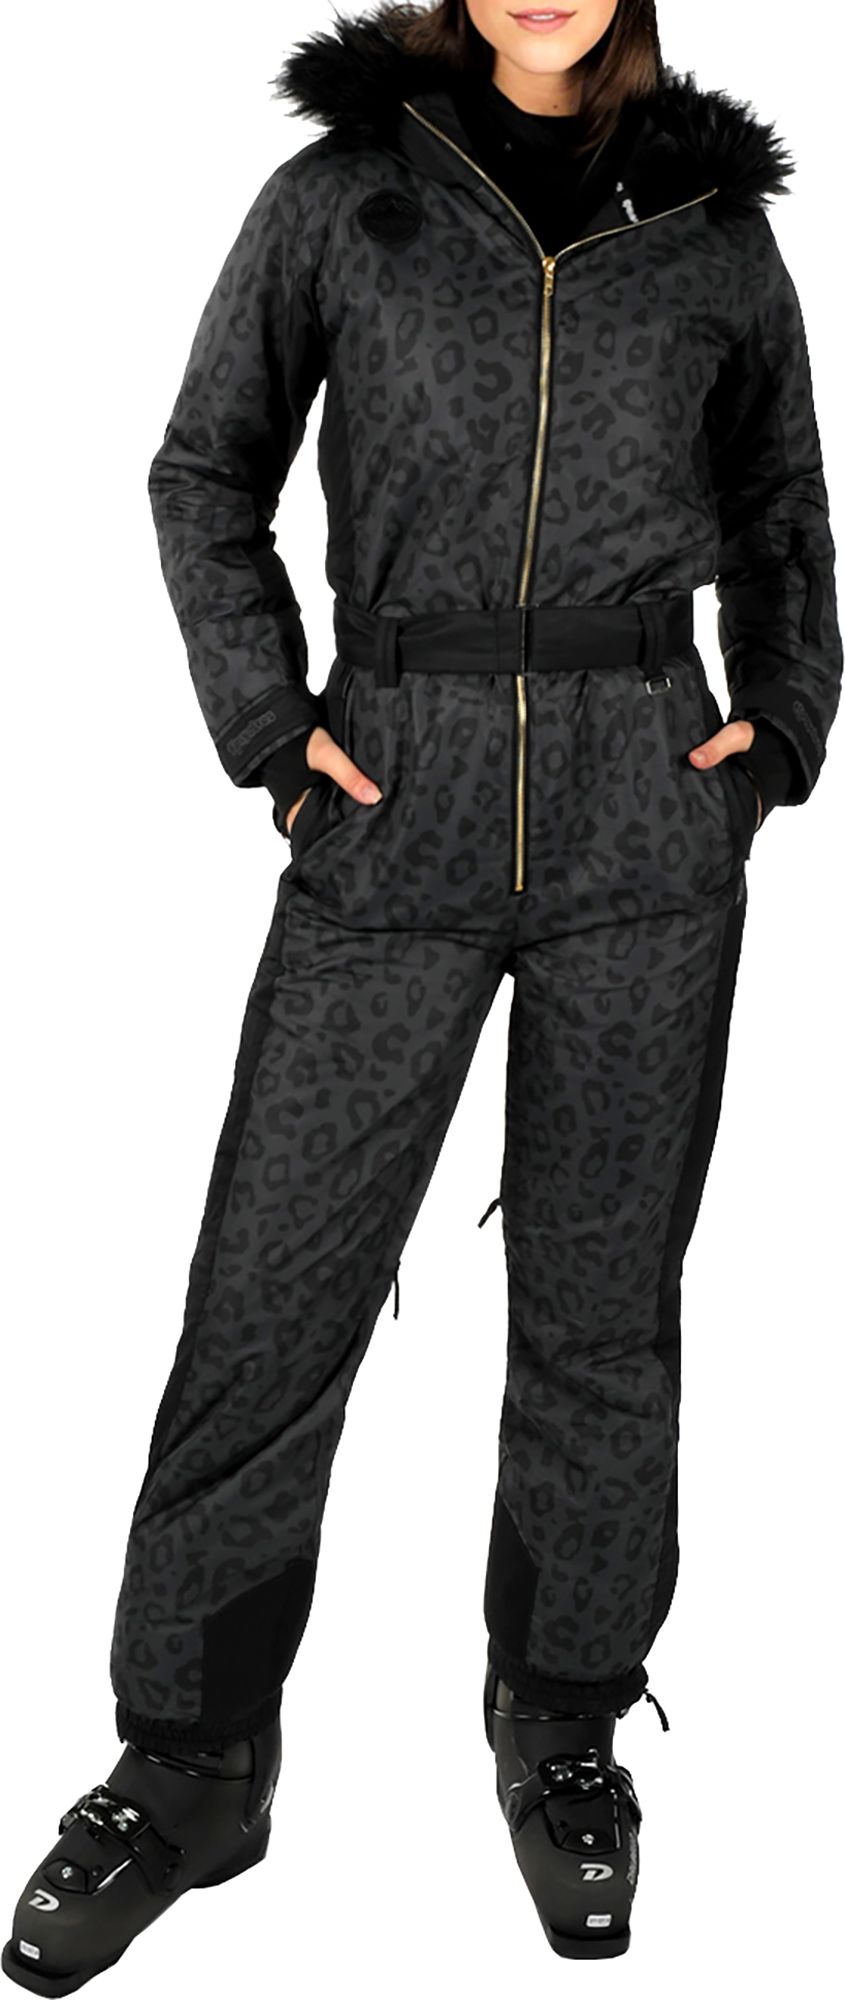 Photos - Ski Wear Tipsy Elves Women's Midnight Leopard Snow Suit, XL, Black 22DBPWWMDNGHTLPR